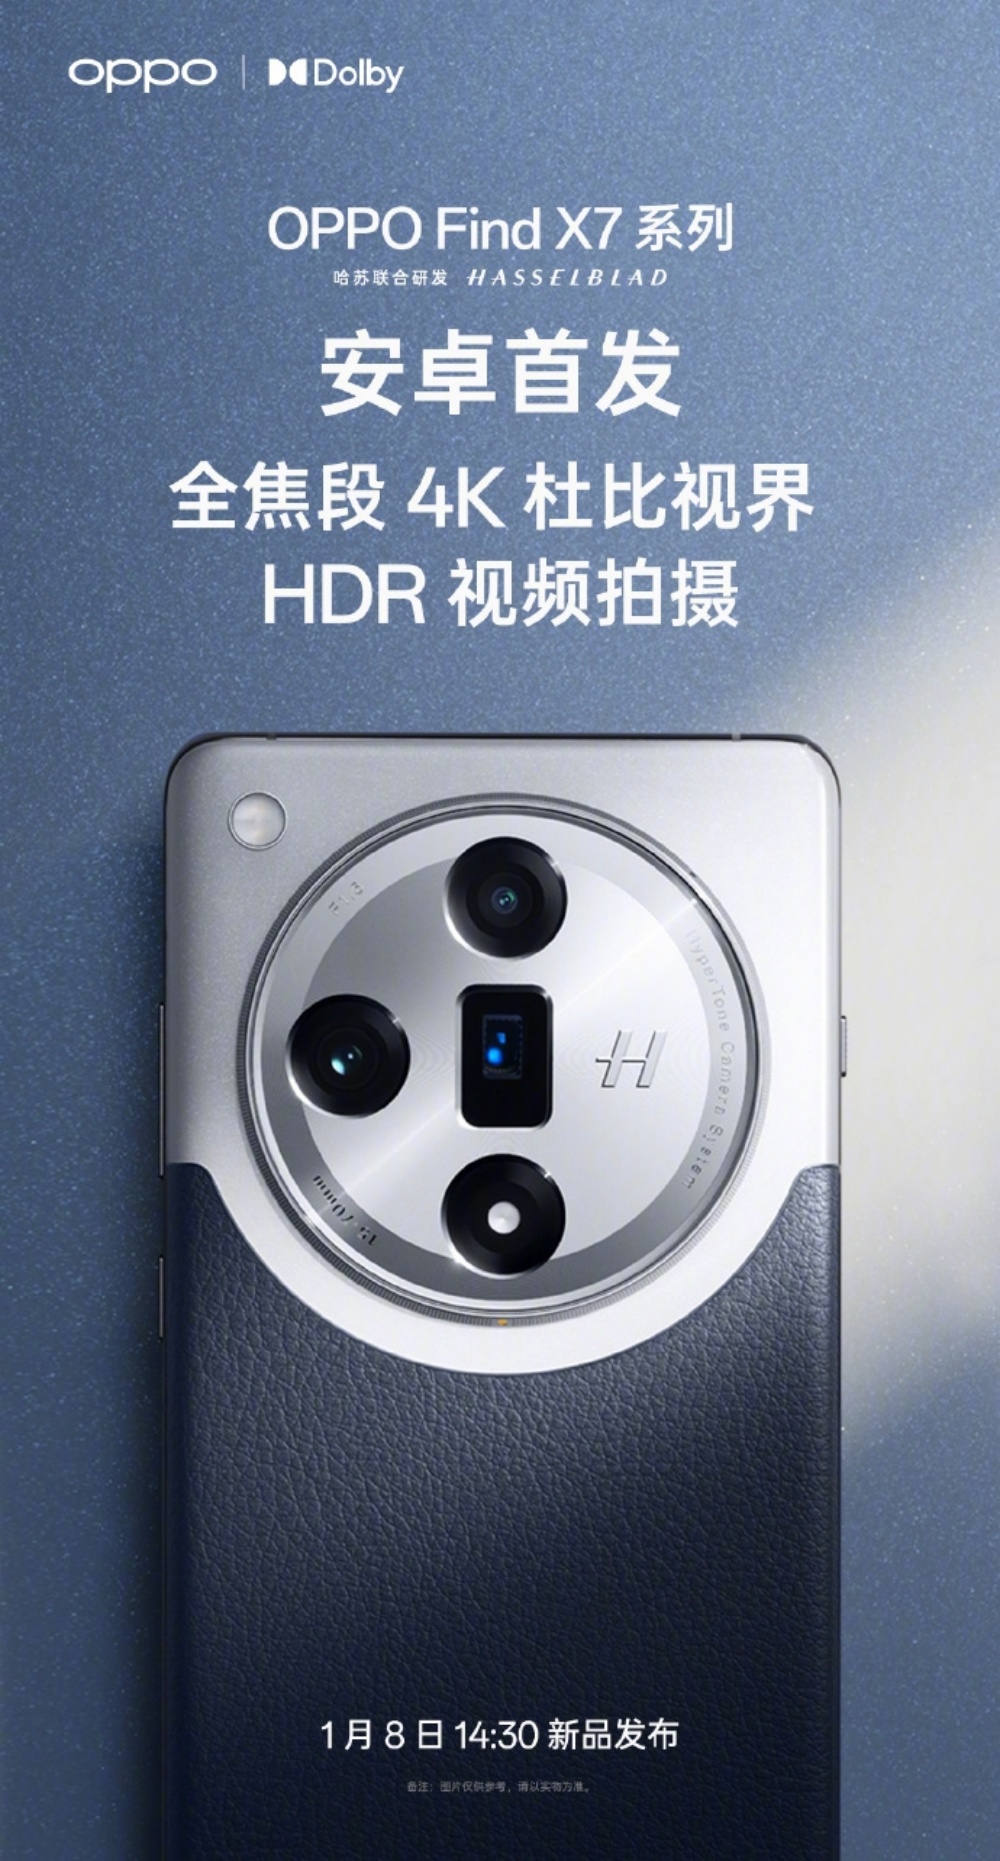 OPPO Find X7首发全焦段杜比视界HDR视频拍摄 打造大师级影像